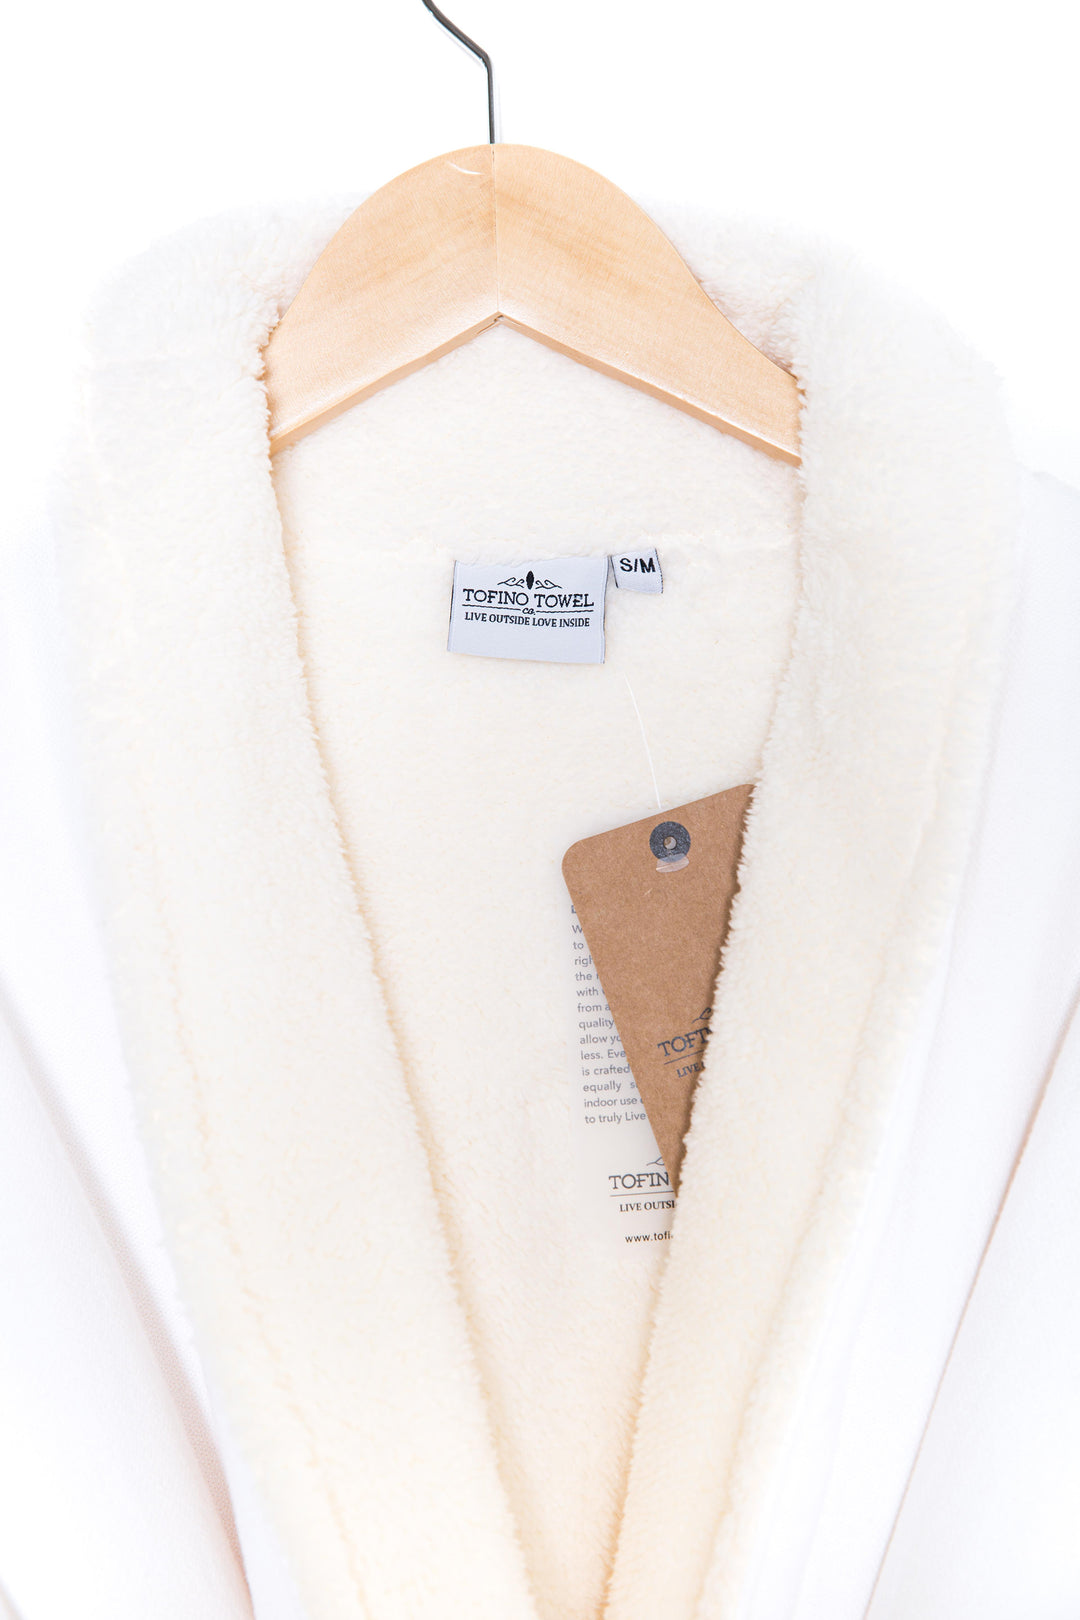 THE NORDIC Fleece Robe – Tofino Towel Co.